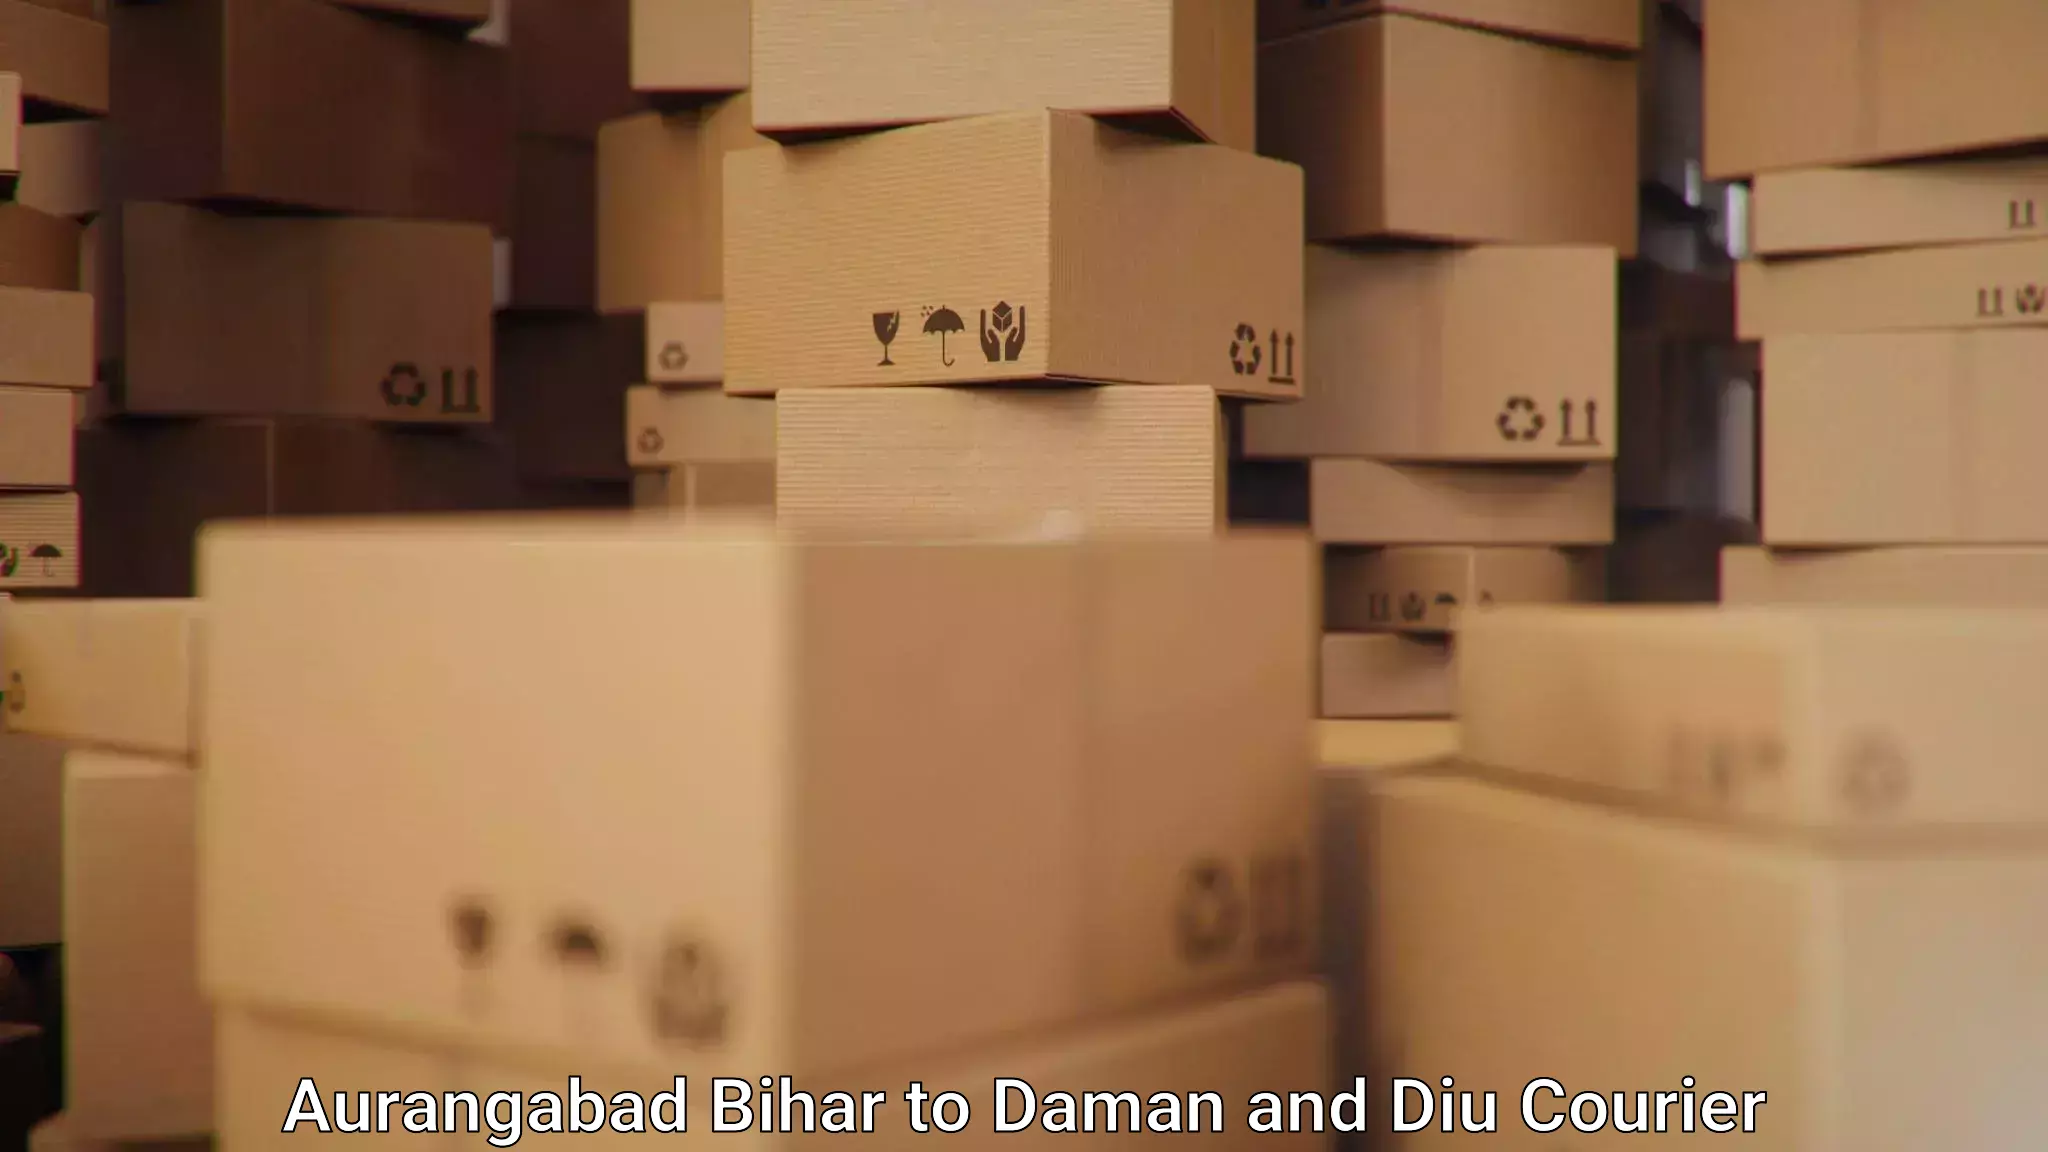 Efficient package consolidation Aurangabad Bihar to Daman and Diu